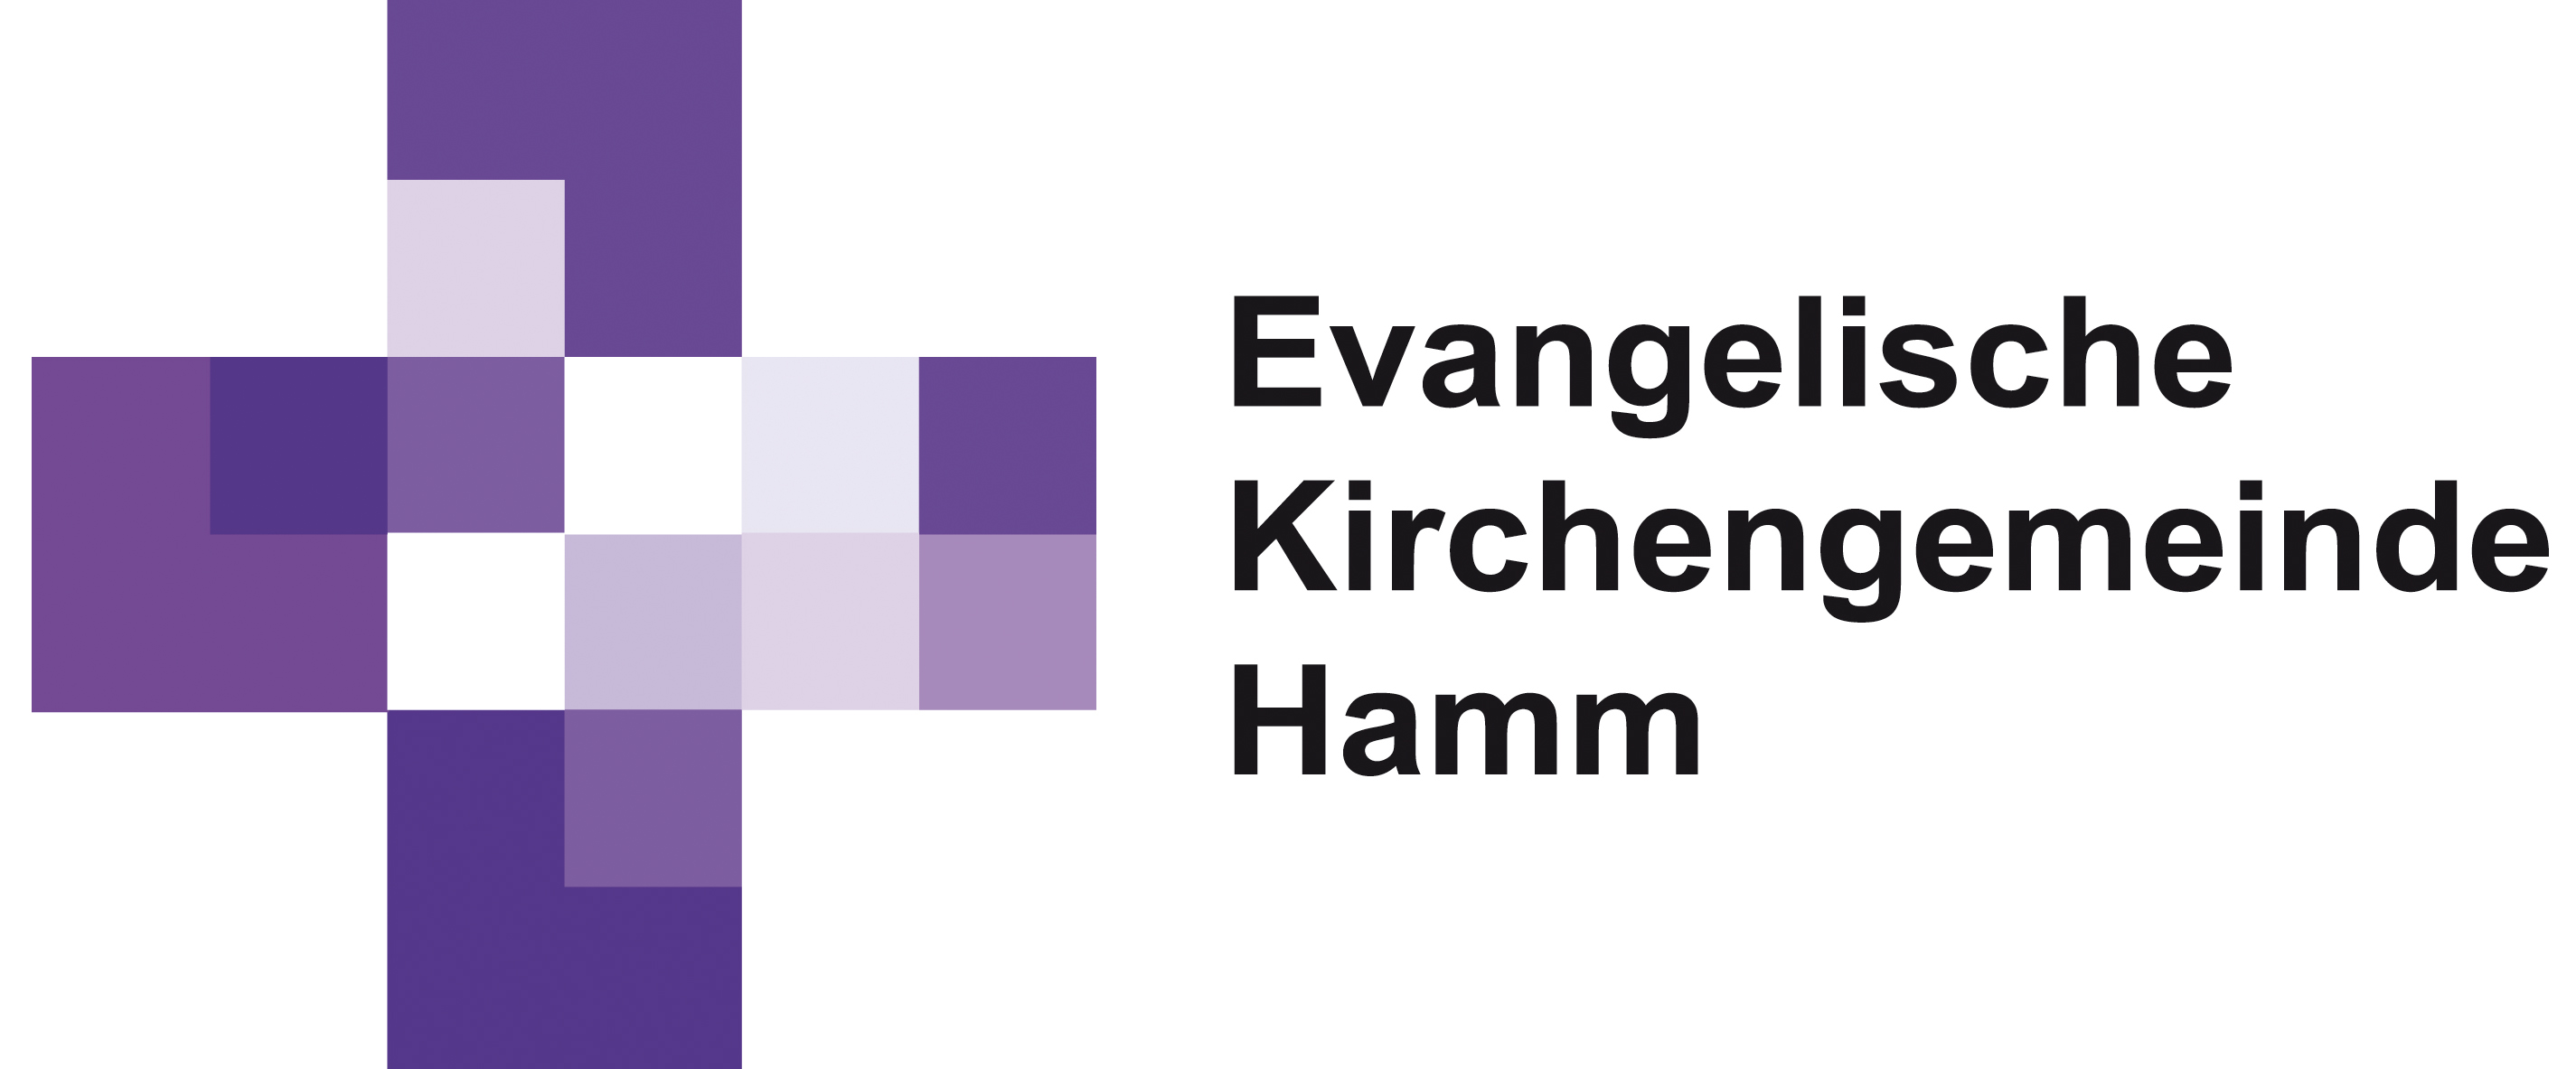 Ev. Kirchengemeinde Logo